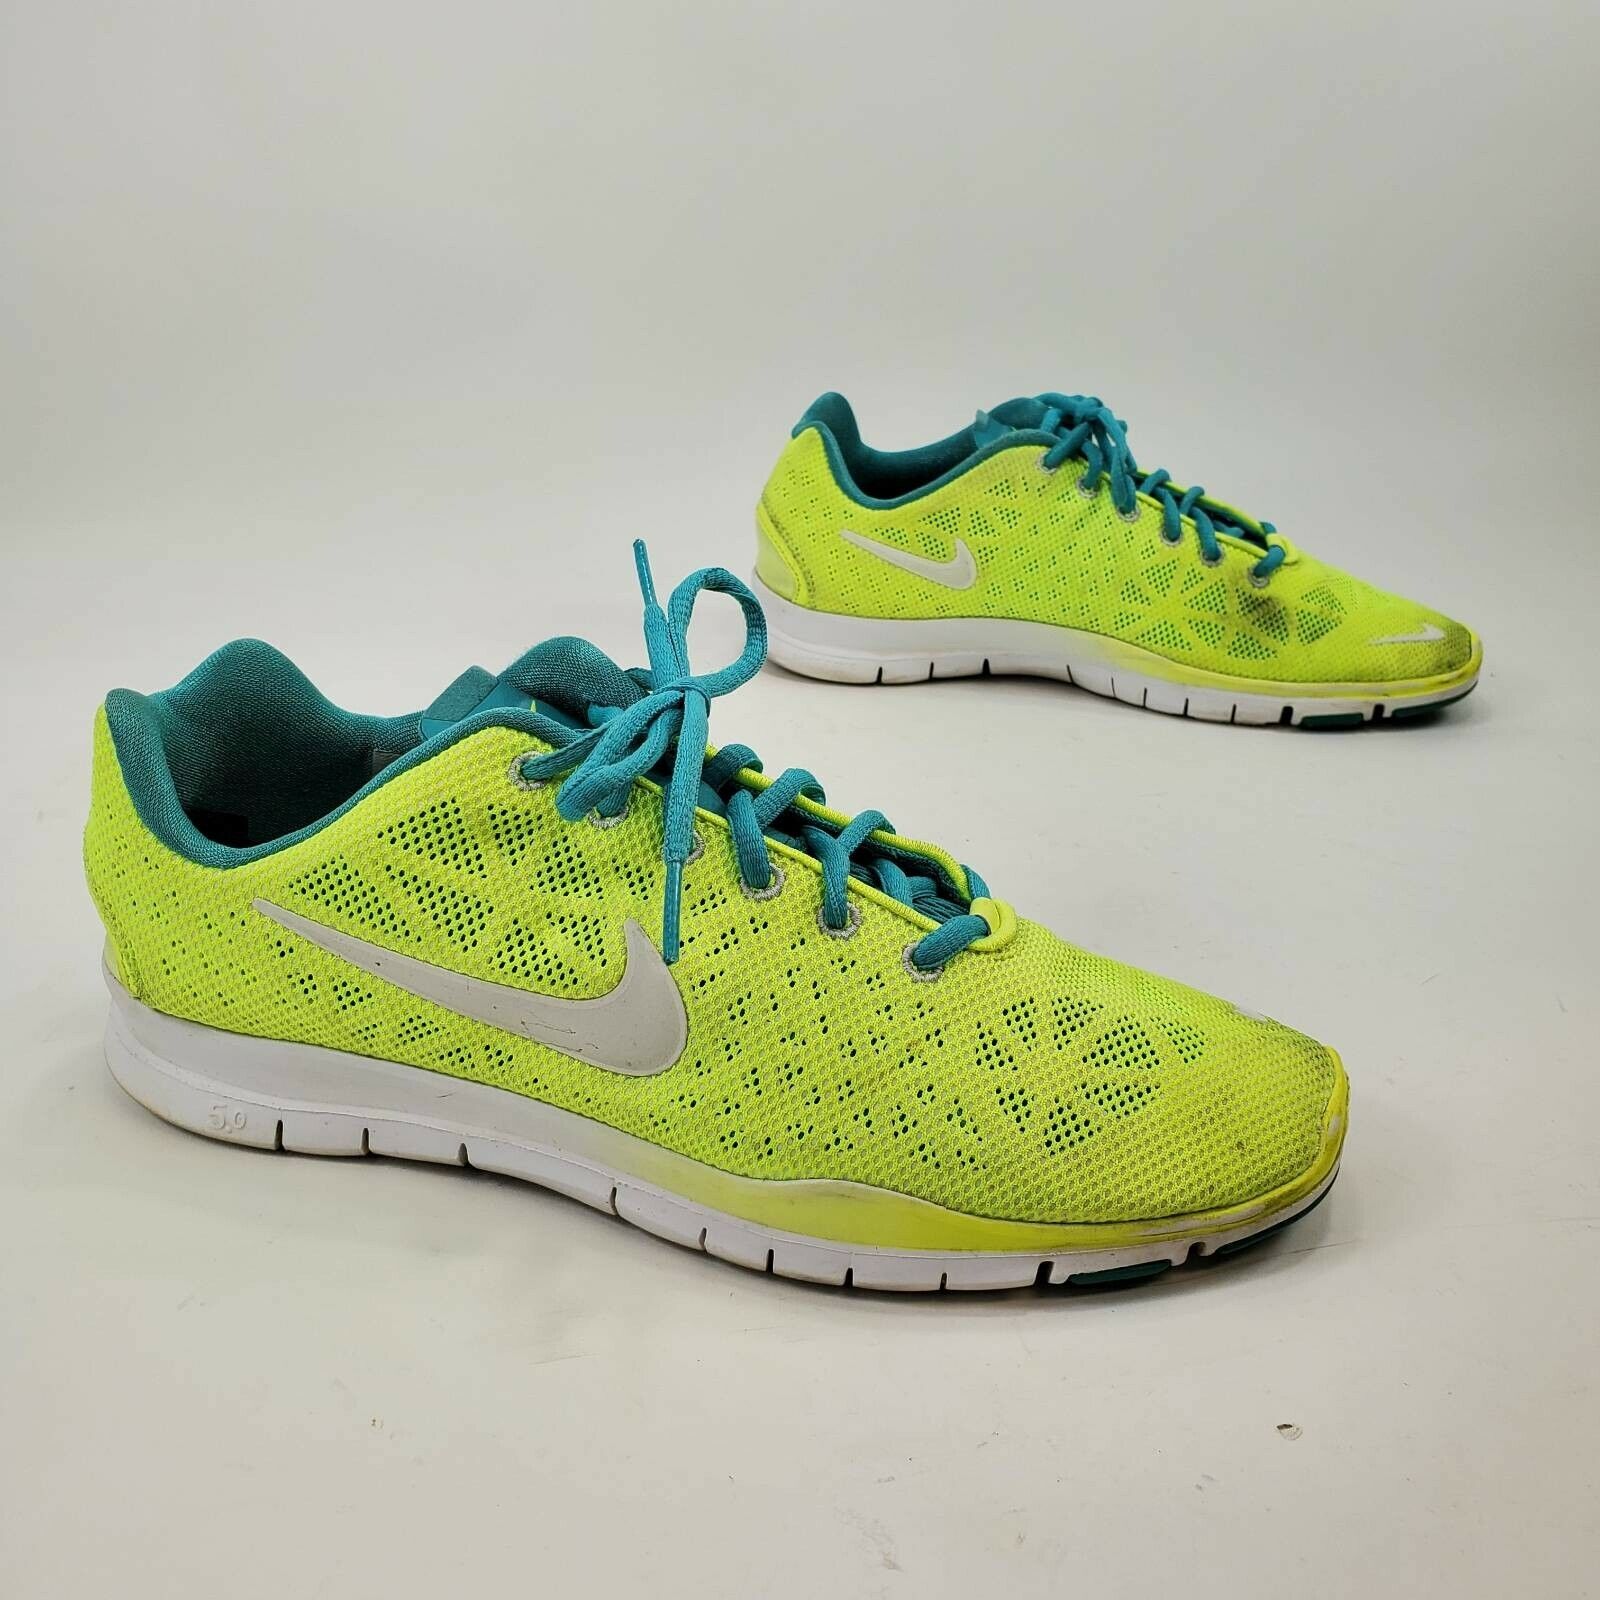 skære ned Odysseus brændstof Nike Womens Free Tr Fit 3 Running Shoes Green 579968-700 Lace Up Mesh 9.5 M  | eBay